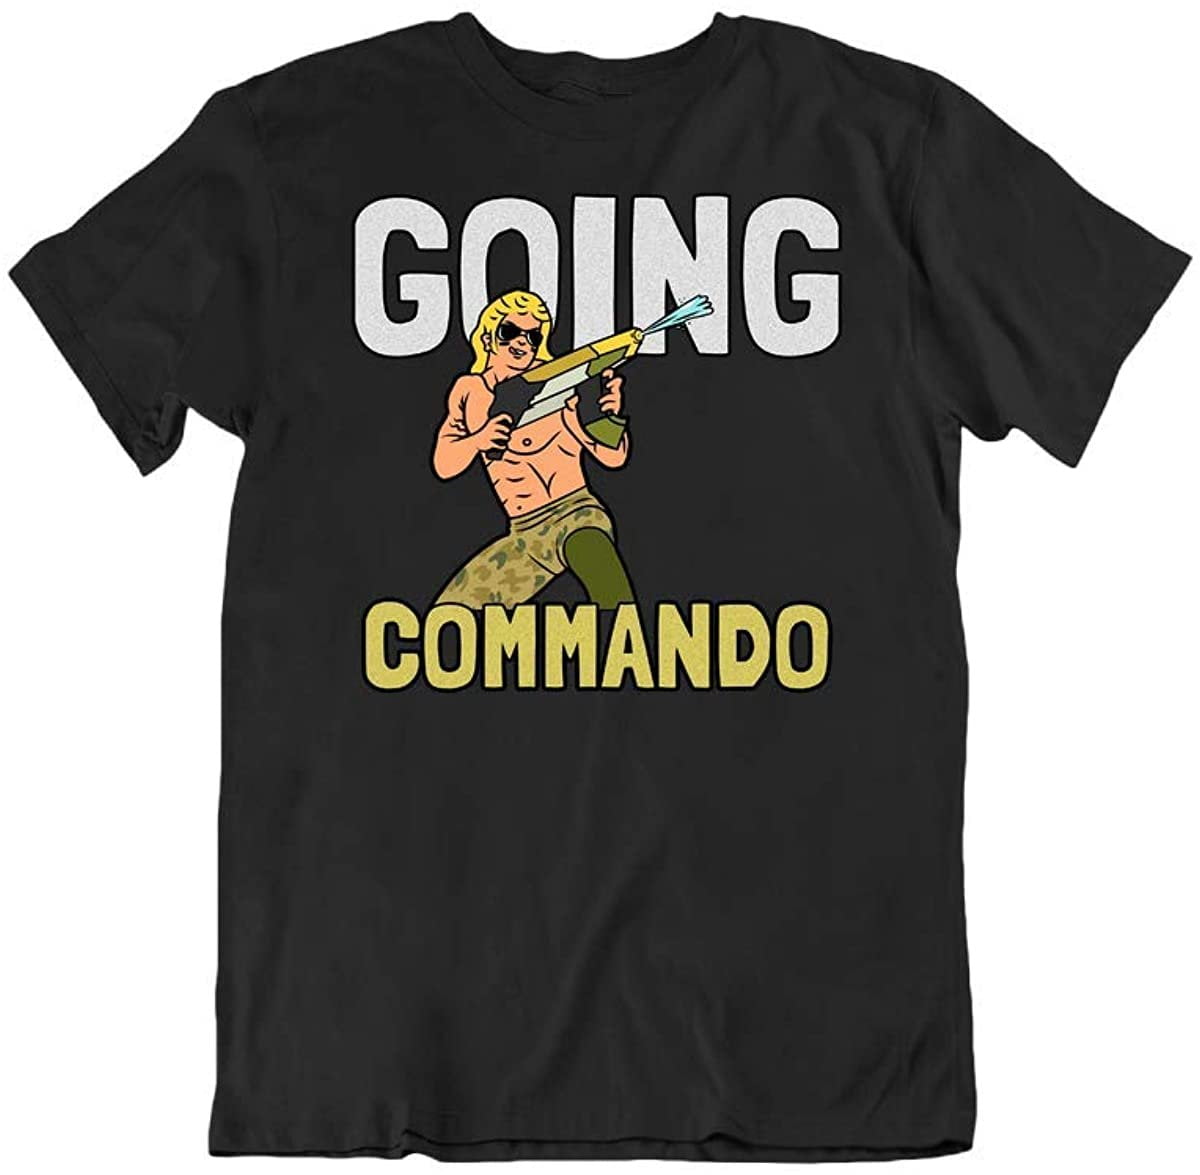 Going Commando Funny Novelty Pun Humor Tee Fashion Design Cotton T-Shirt Red